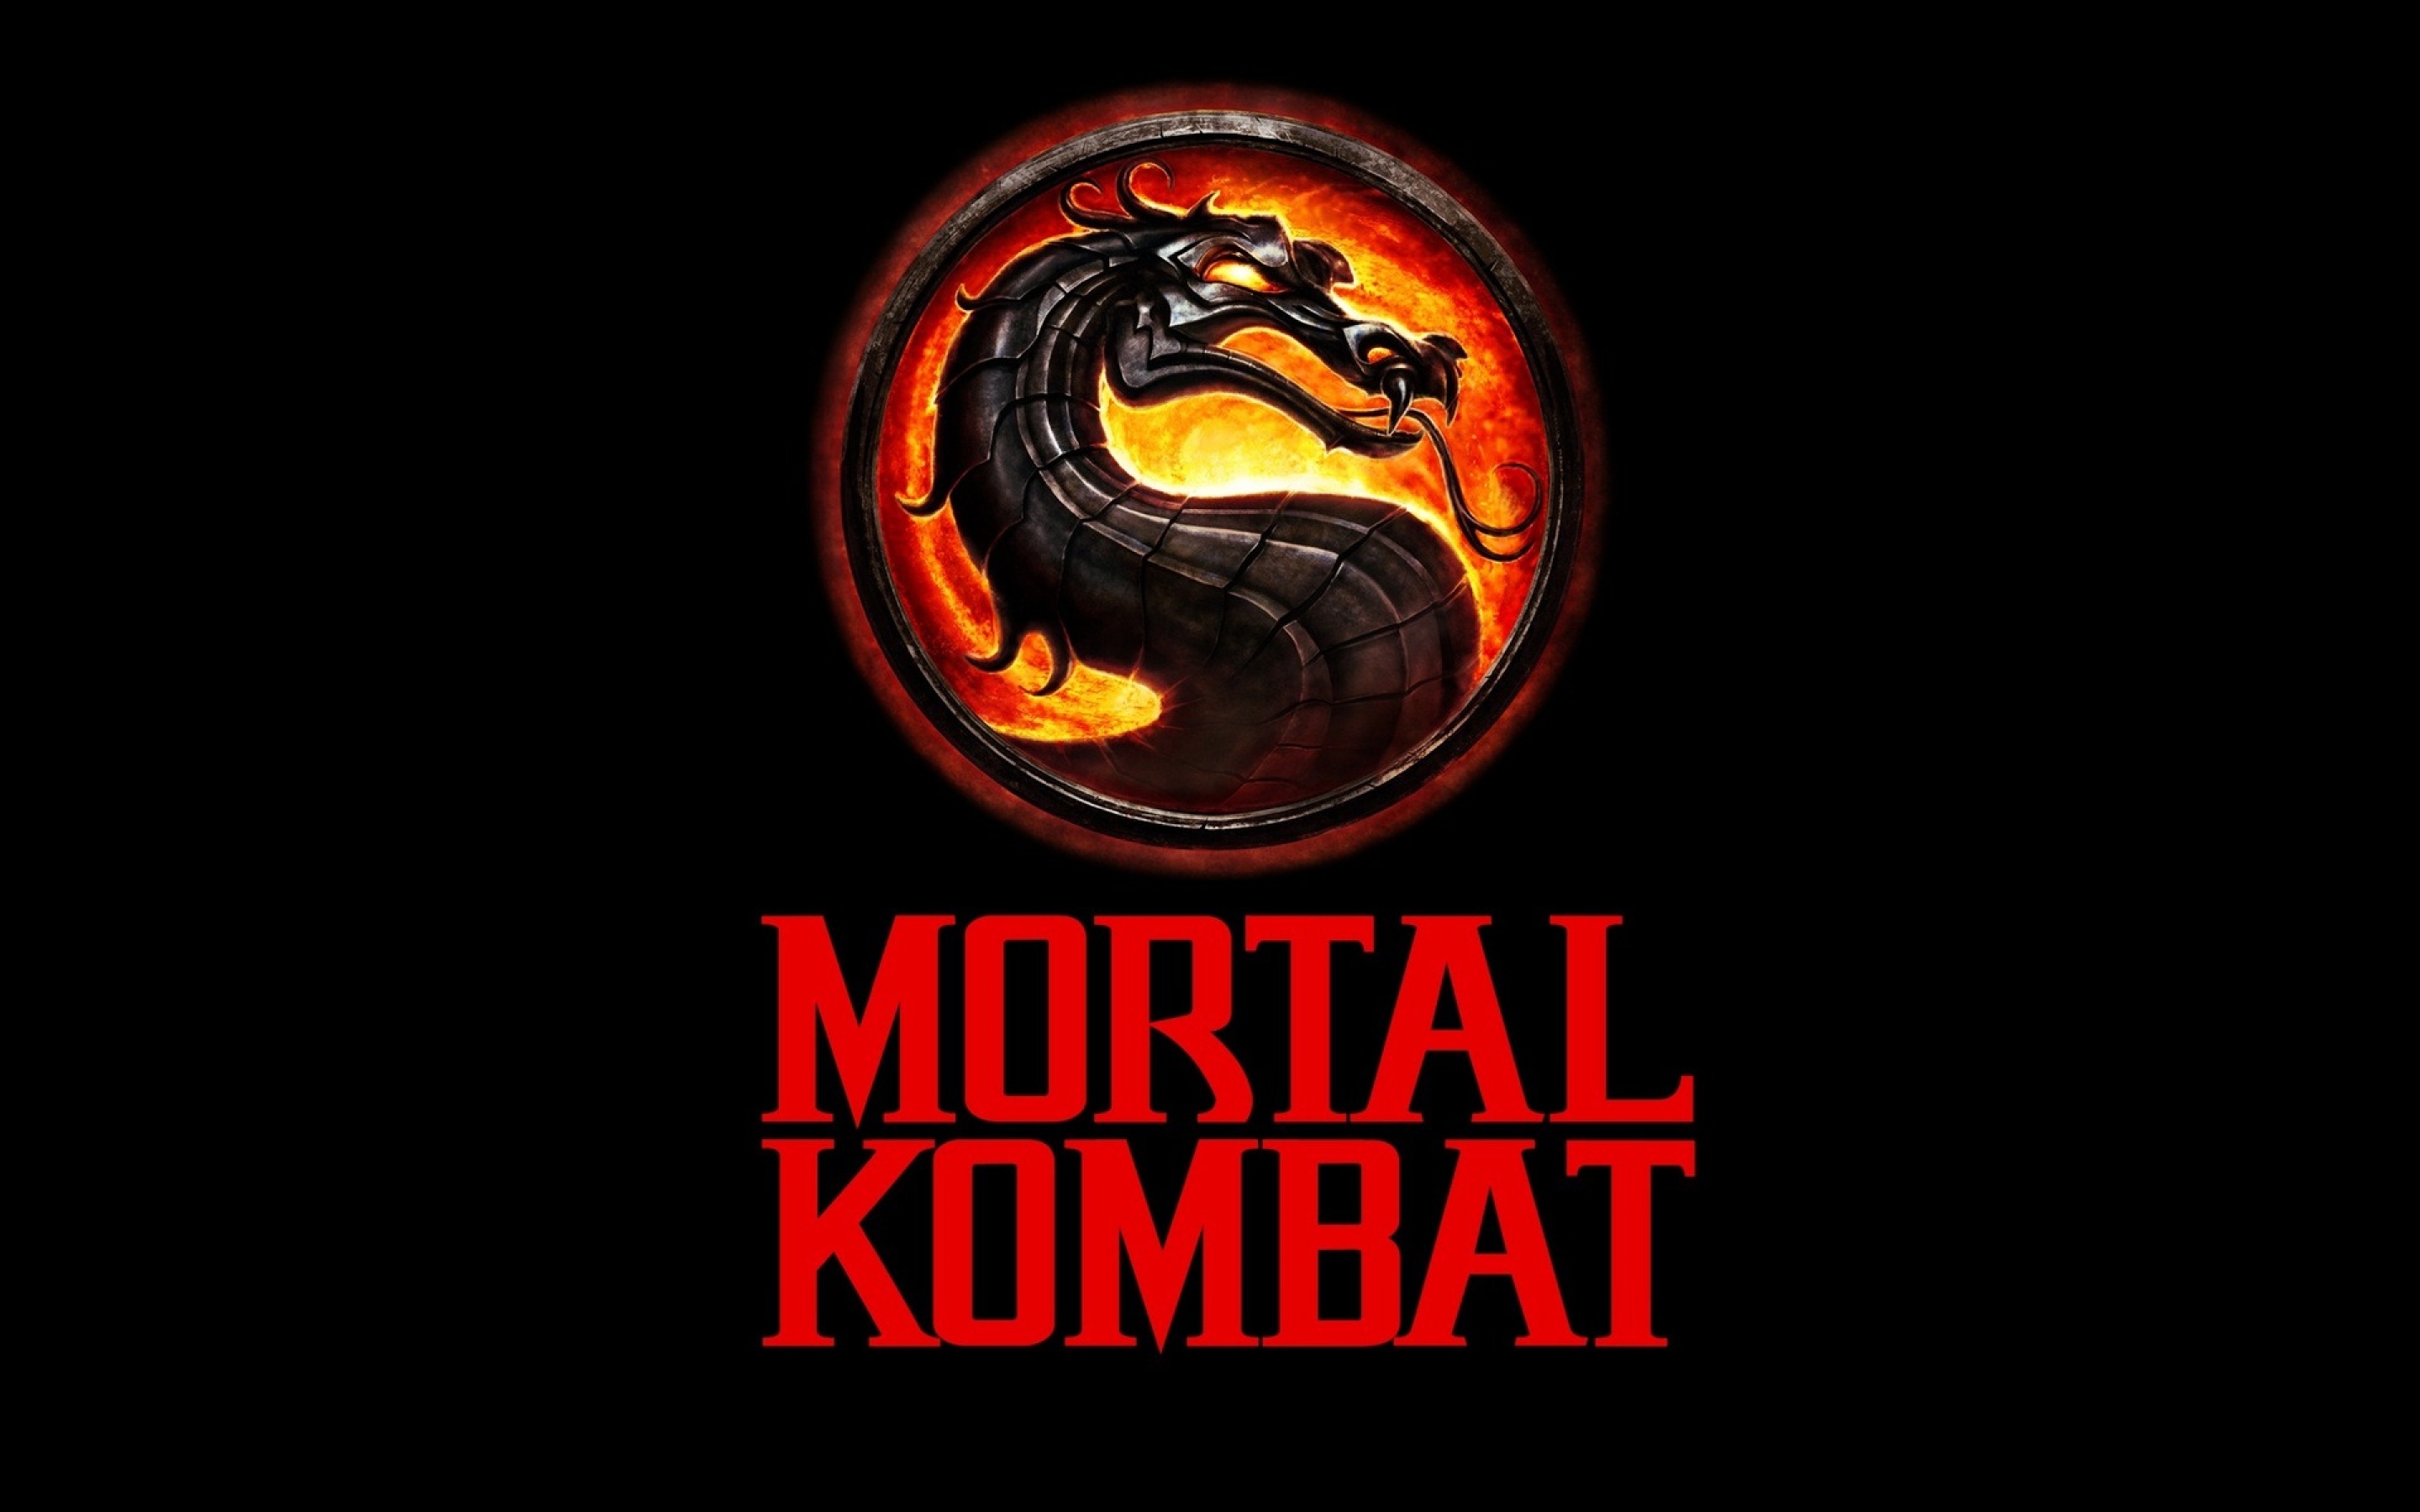 Mortal Kombat Symbol Wallpapers Wallpaper Cave Images